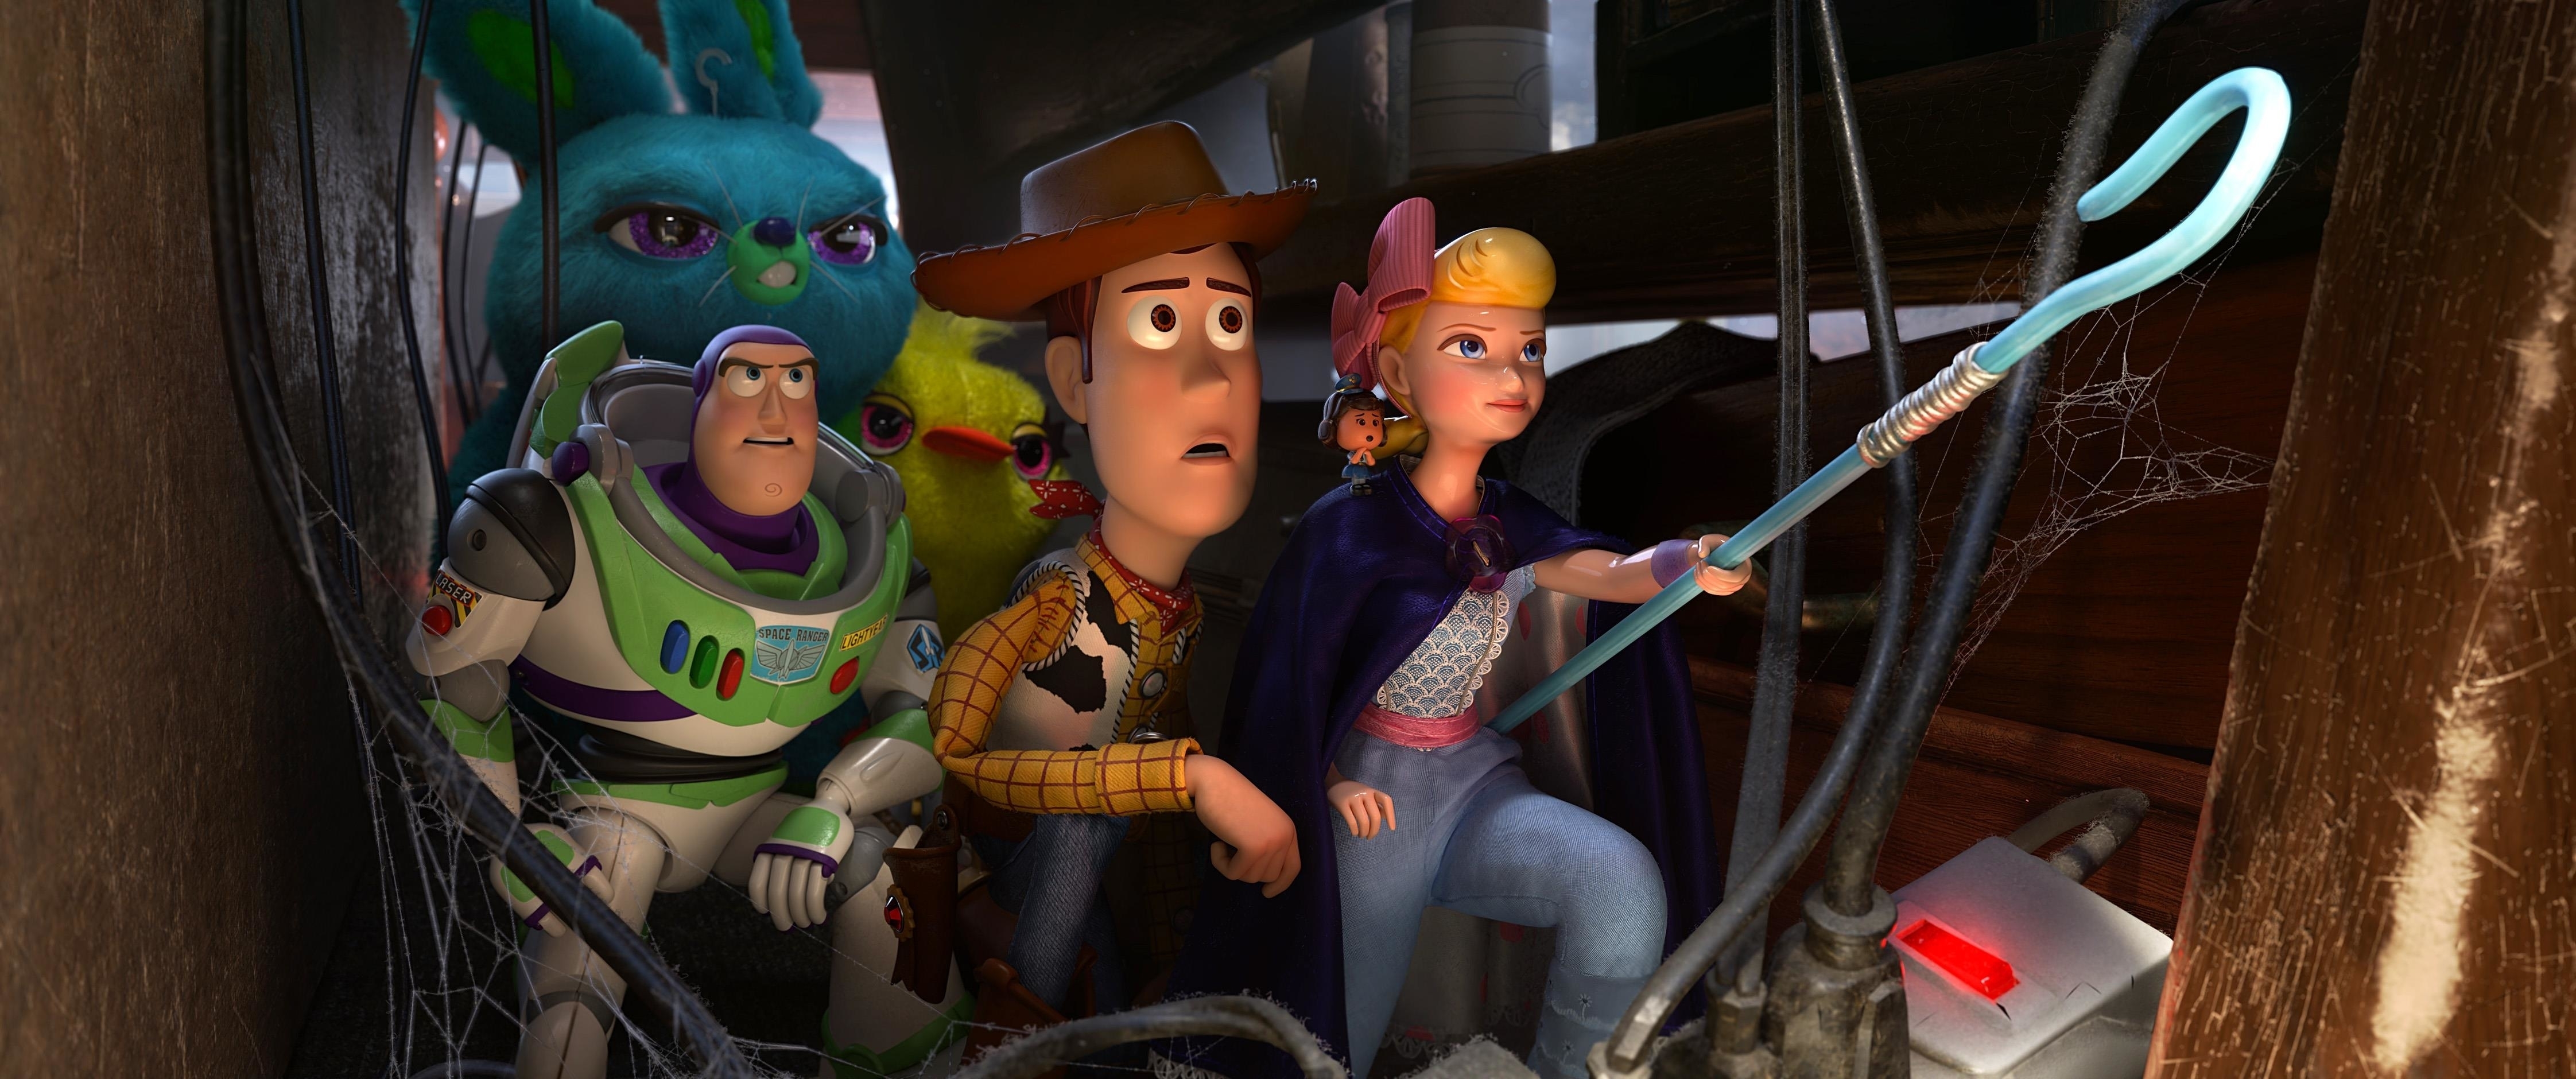 Image du film Toy Story 4 91b1aa1b-75e9-43e1-a098-811786b2bade